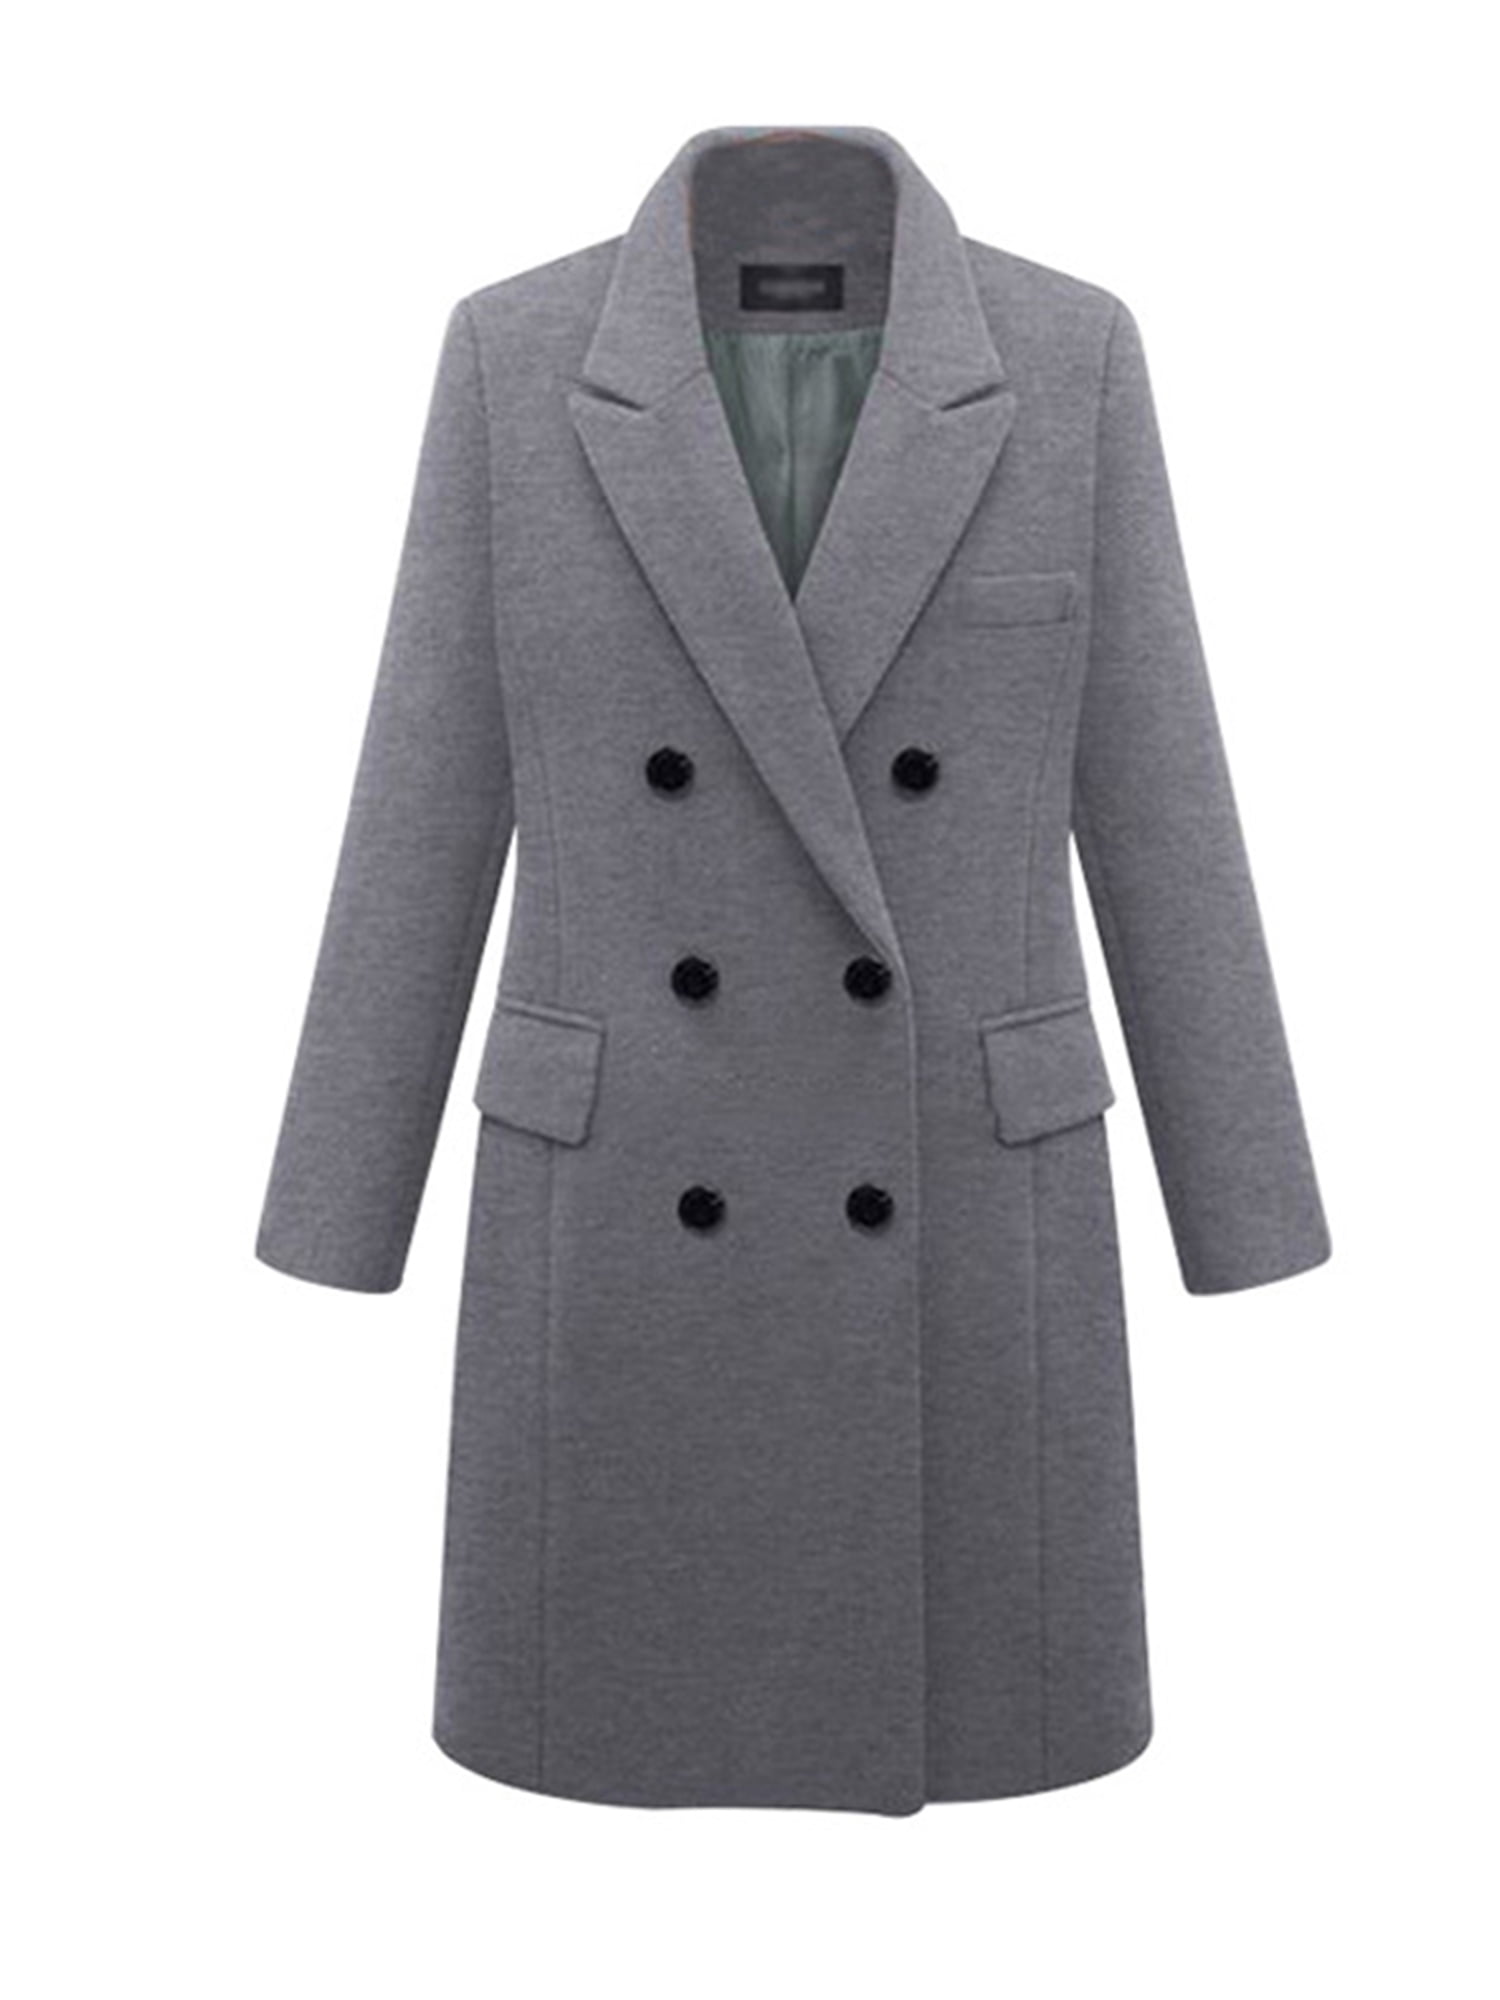 Rambling Popular Winter Wool Blended Coat Women Casual Slim Long Trench Coat Lightweight Button Cardigan w Pocket 